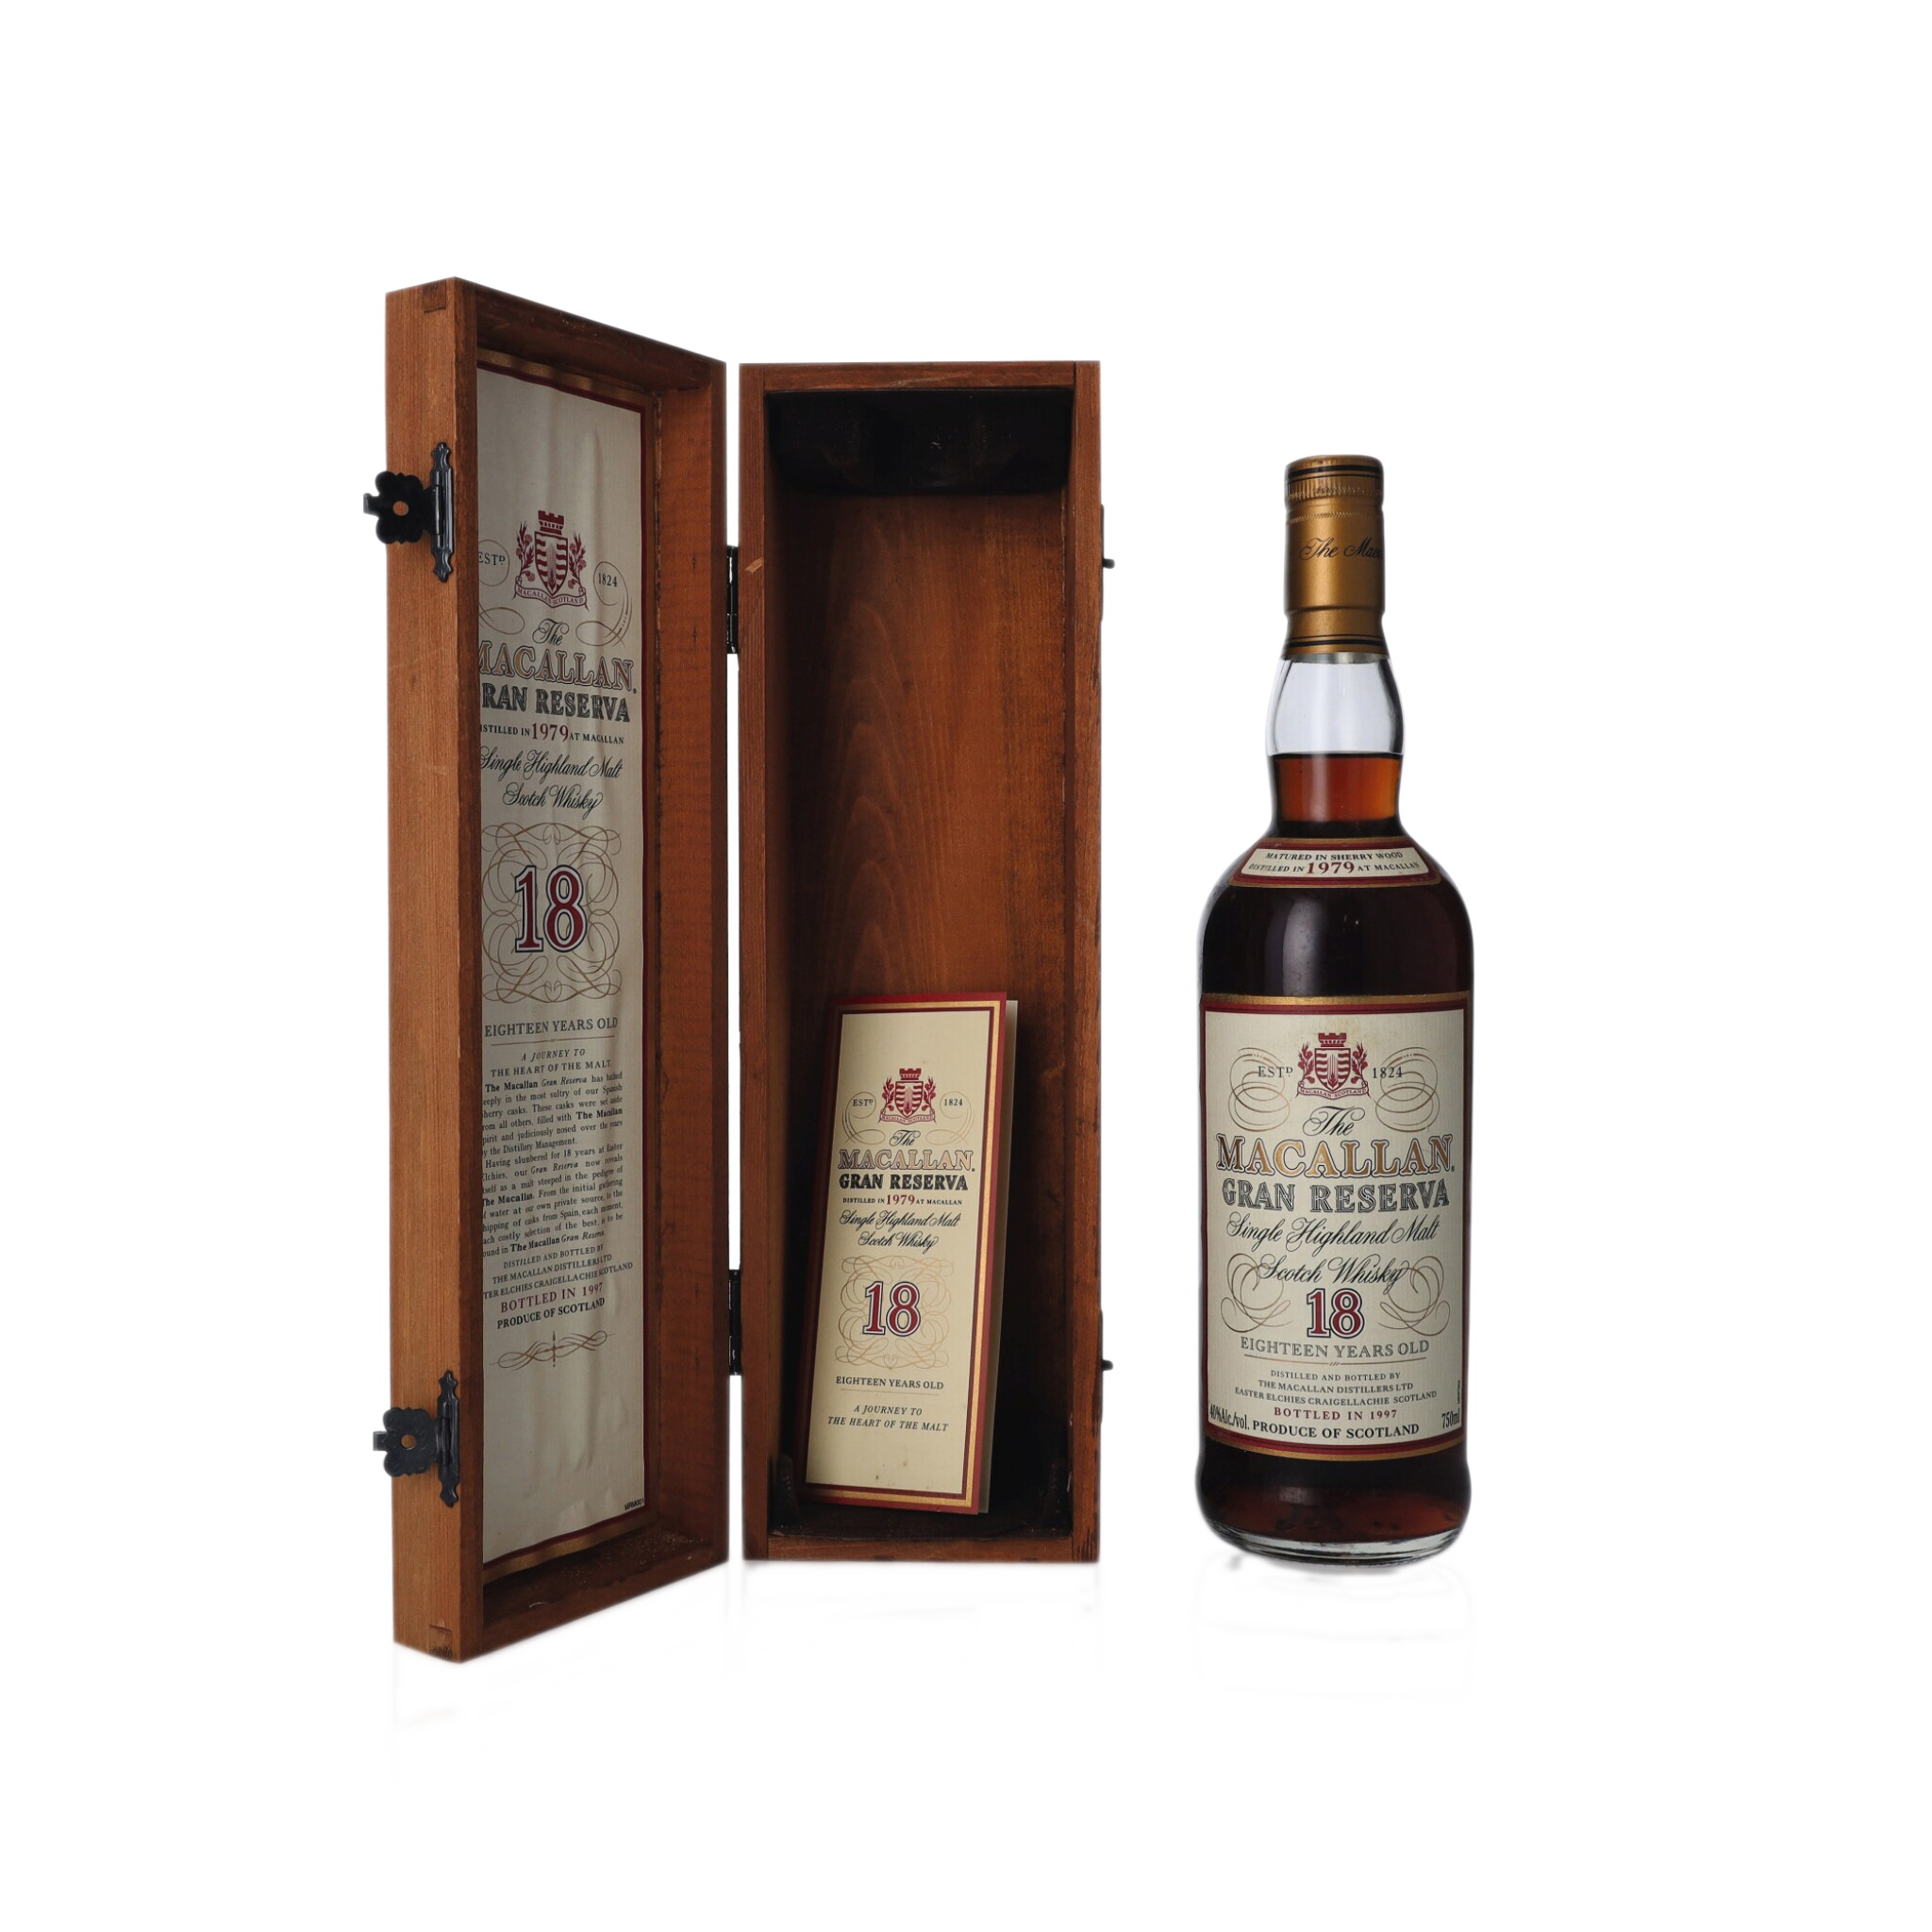 The Macallan Gran Reserva 18 Year Old Single Malt Scotch Whisky 1979 750ml Bottle